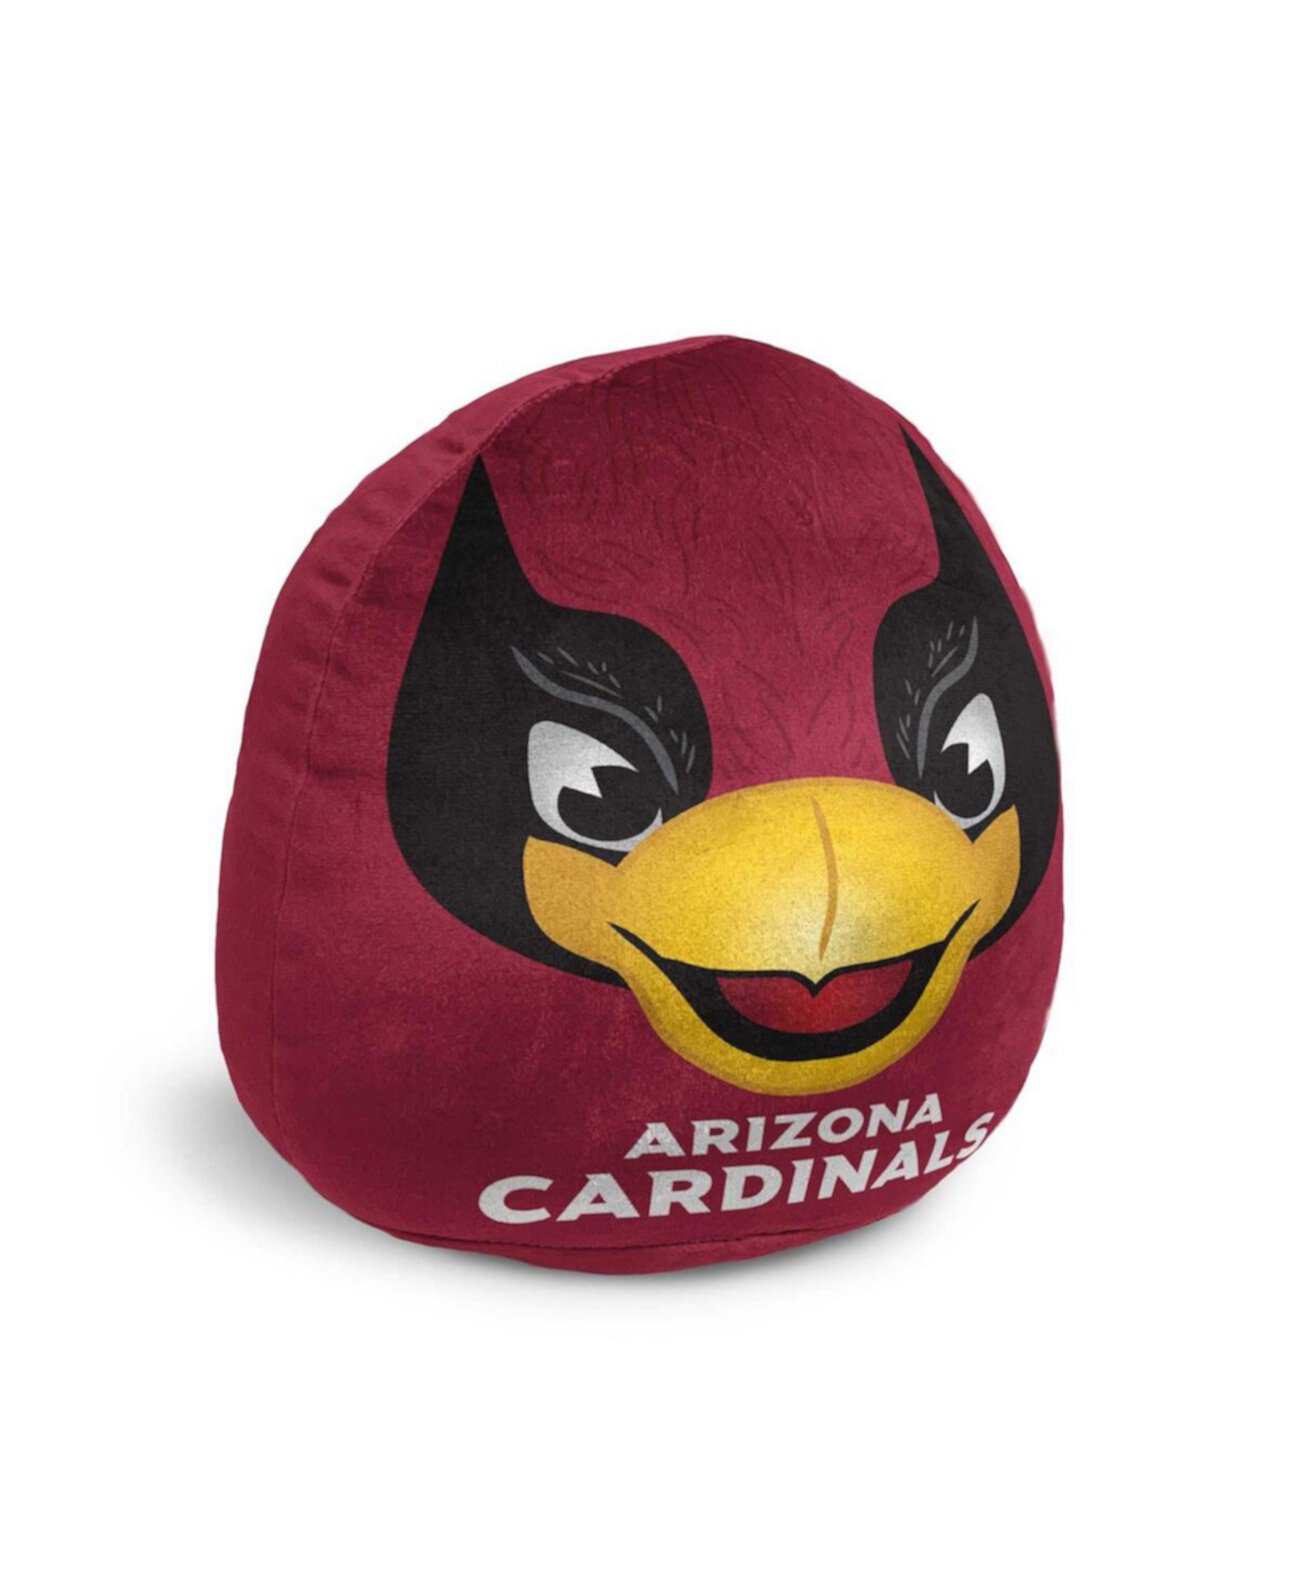 Плюшевая подушка-талисман Arizona Cardinals Pegasus Home Fashions